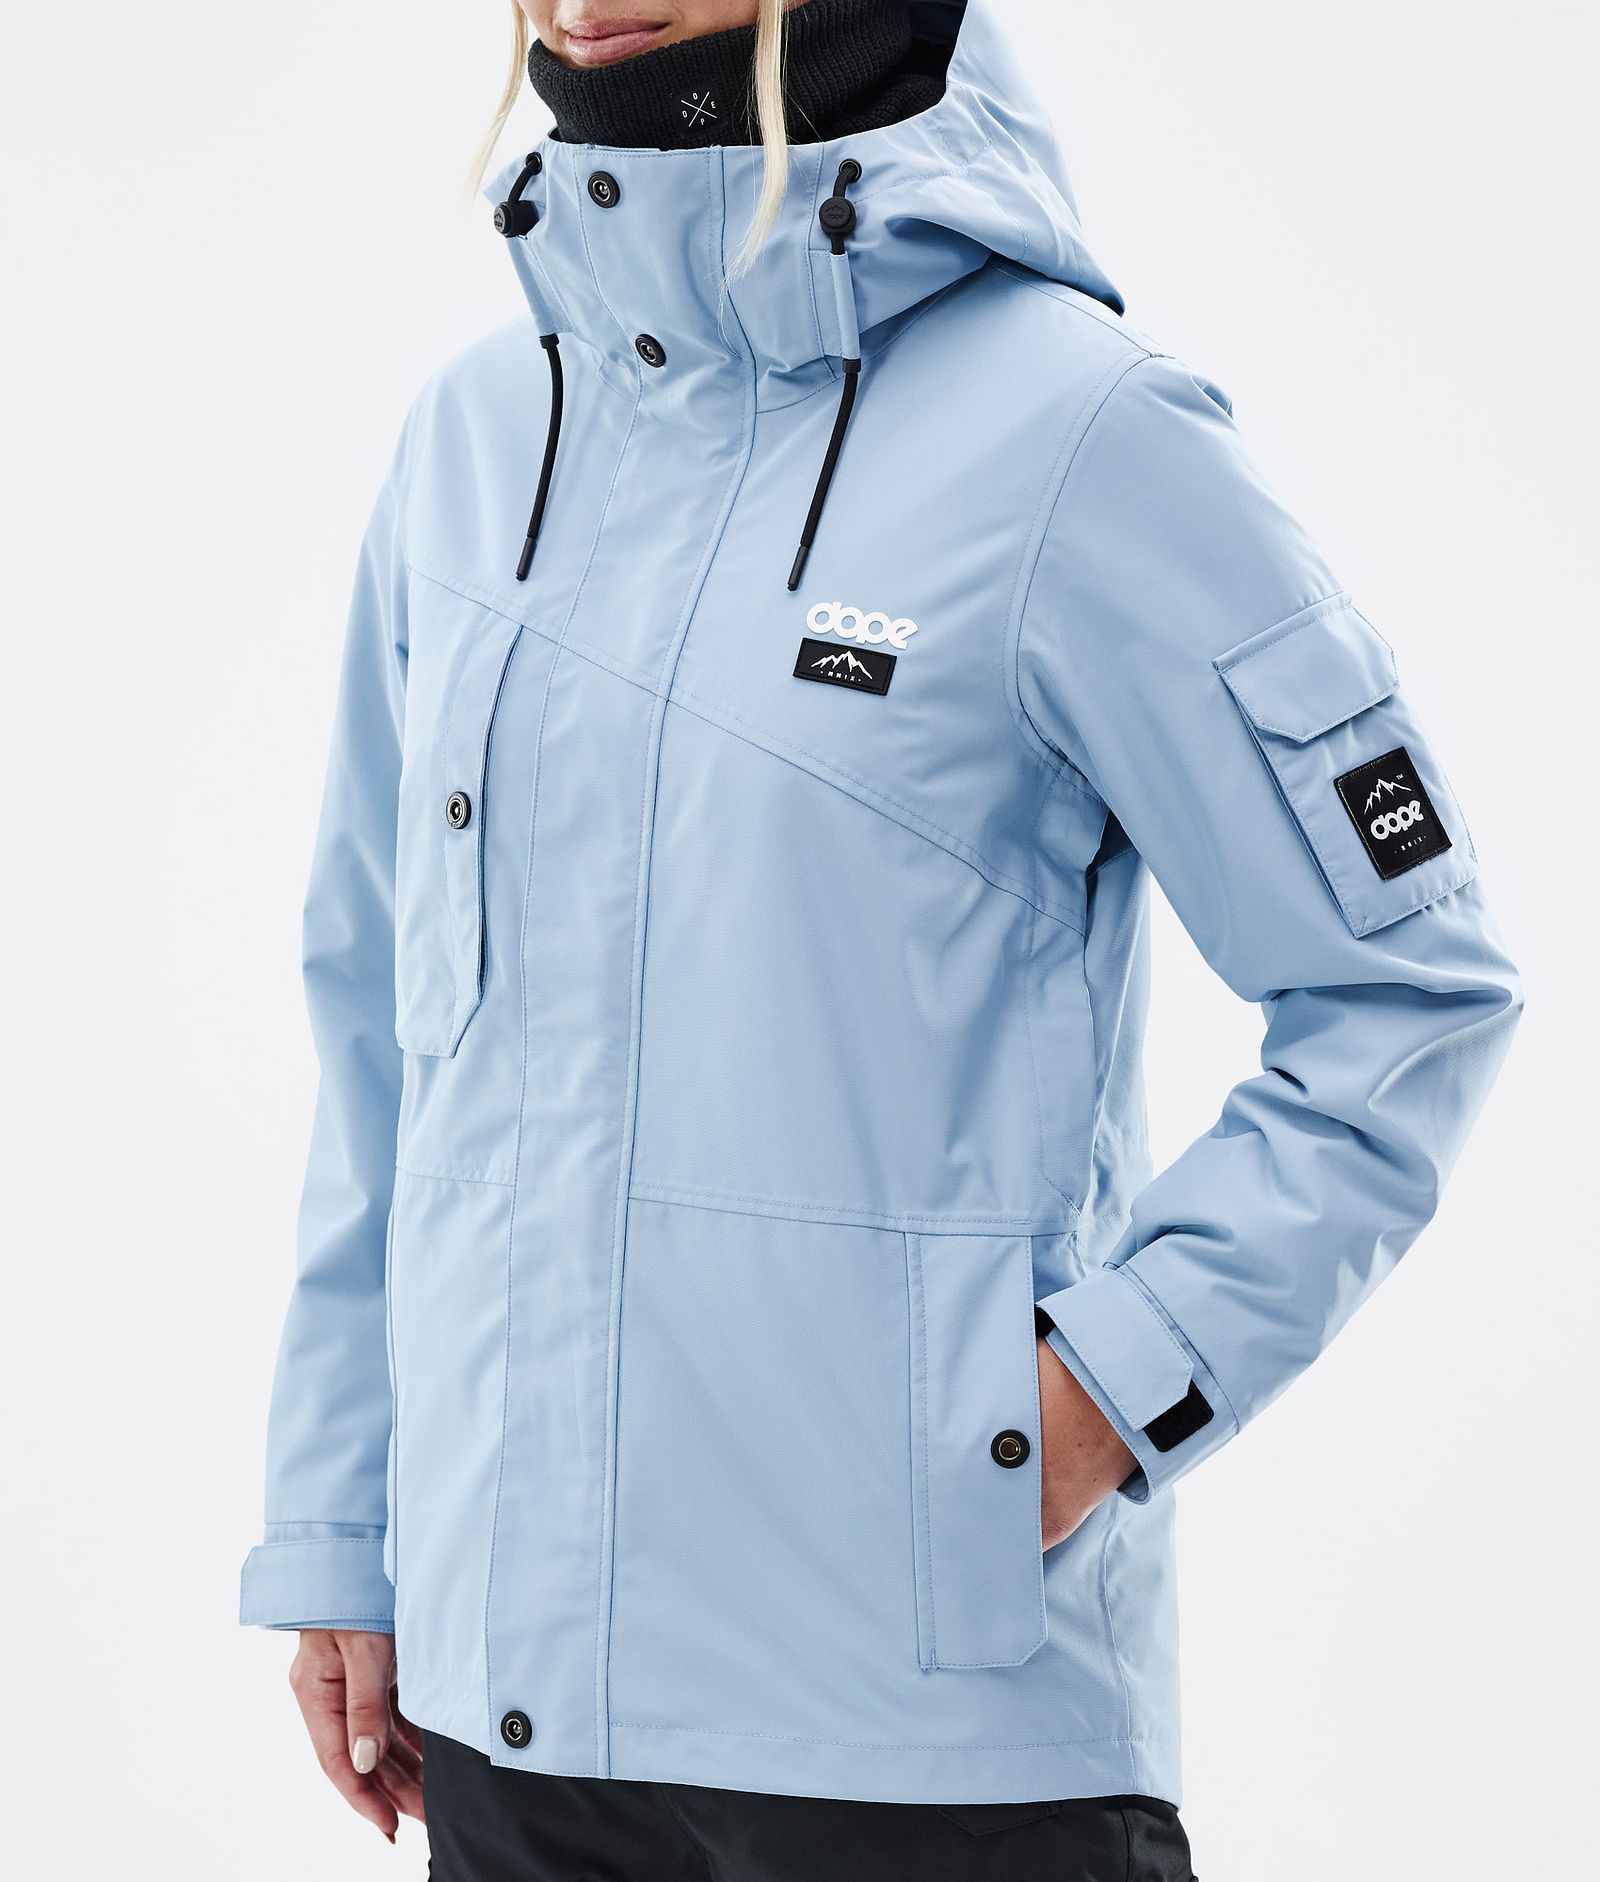 Adept W Snowboard Jacket Women Light Blue, Image 7 of 9